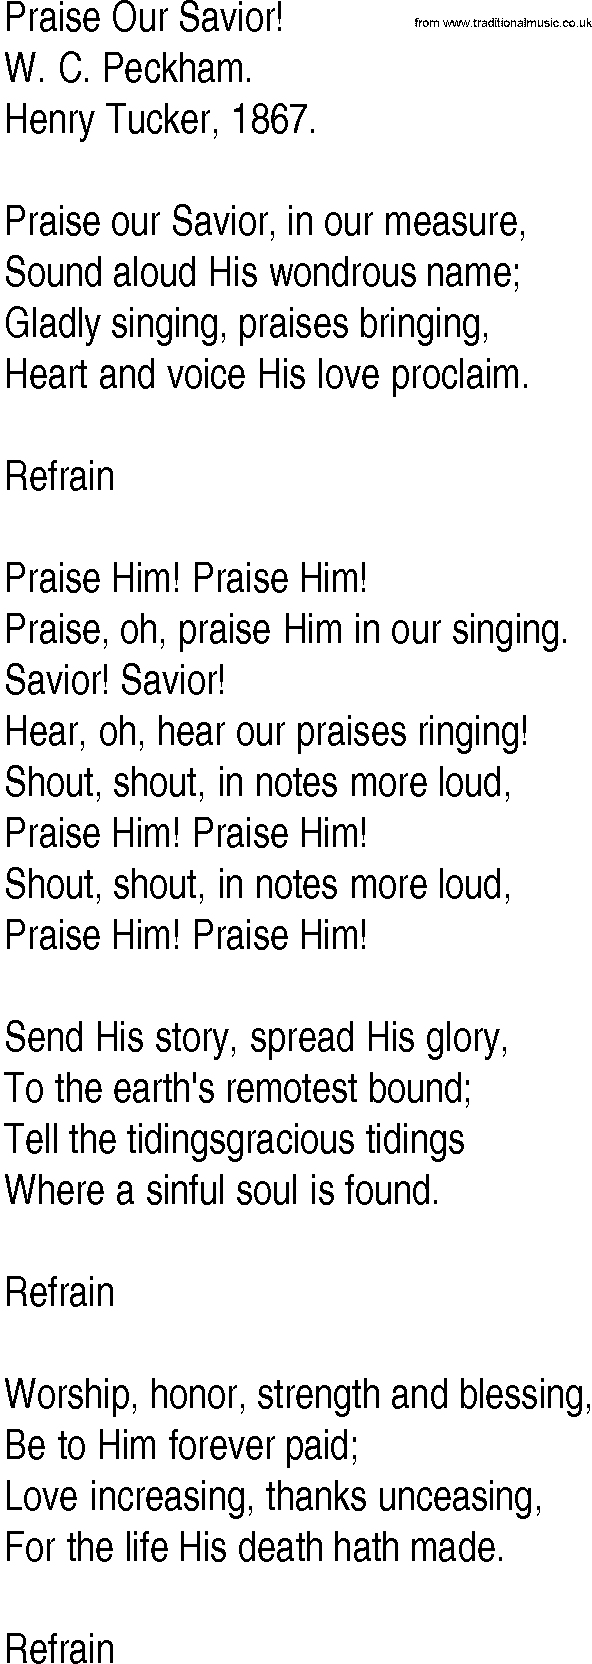 Hymn and Gospel Song: Praise Our Savior! by W C Peckham lyrics